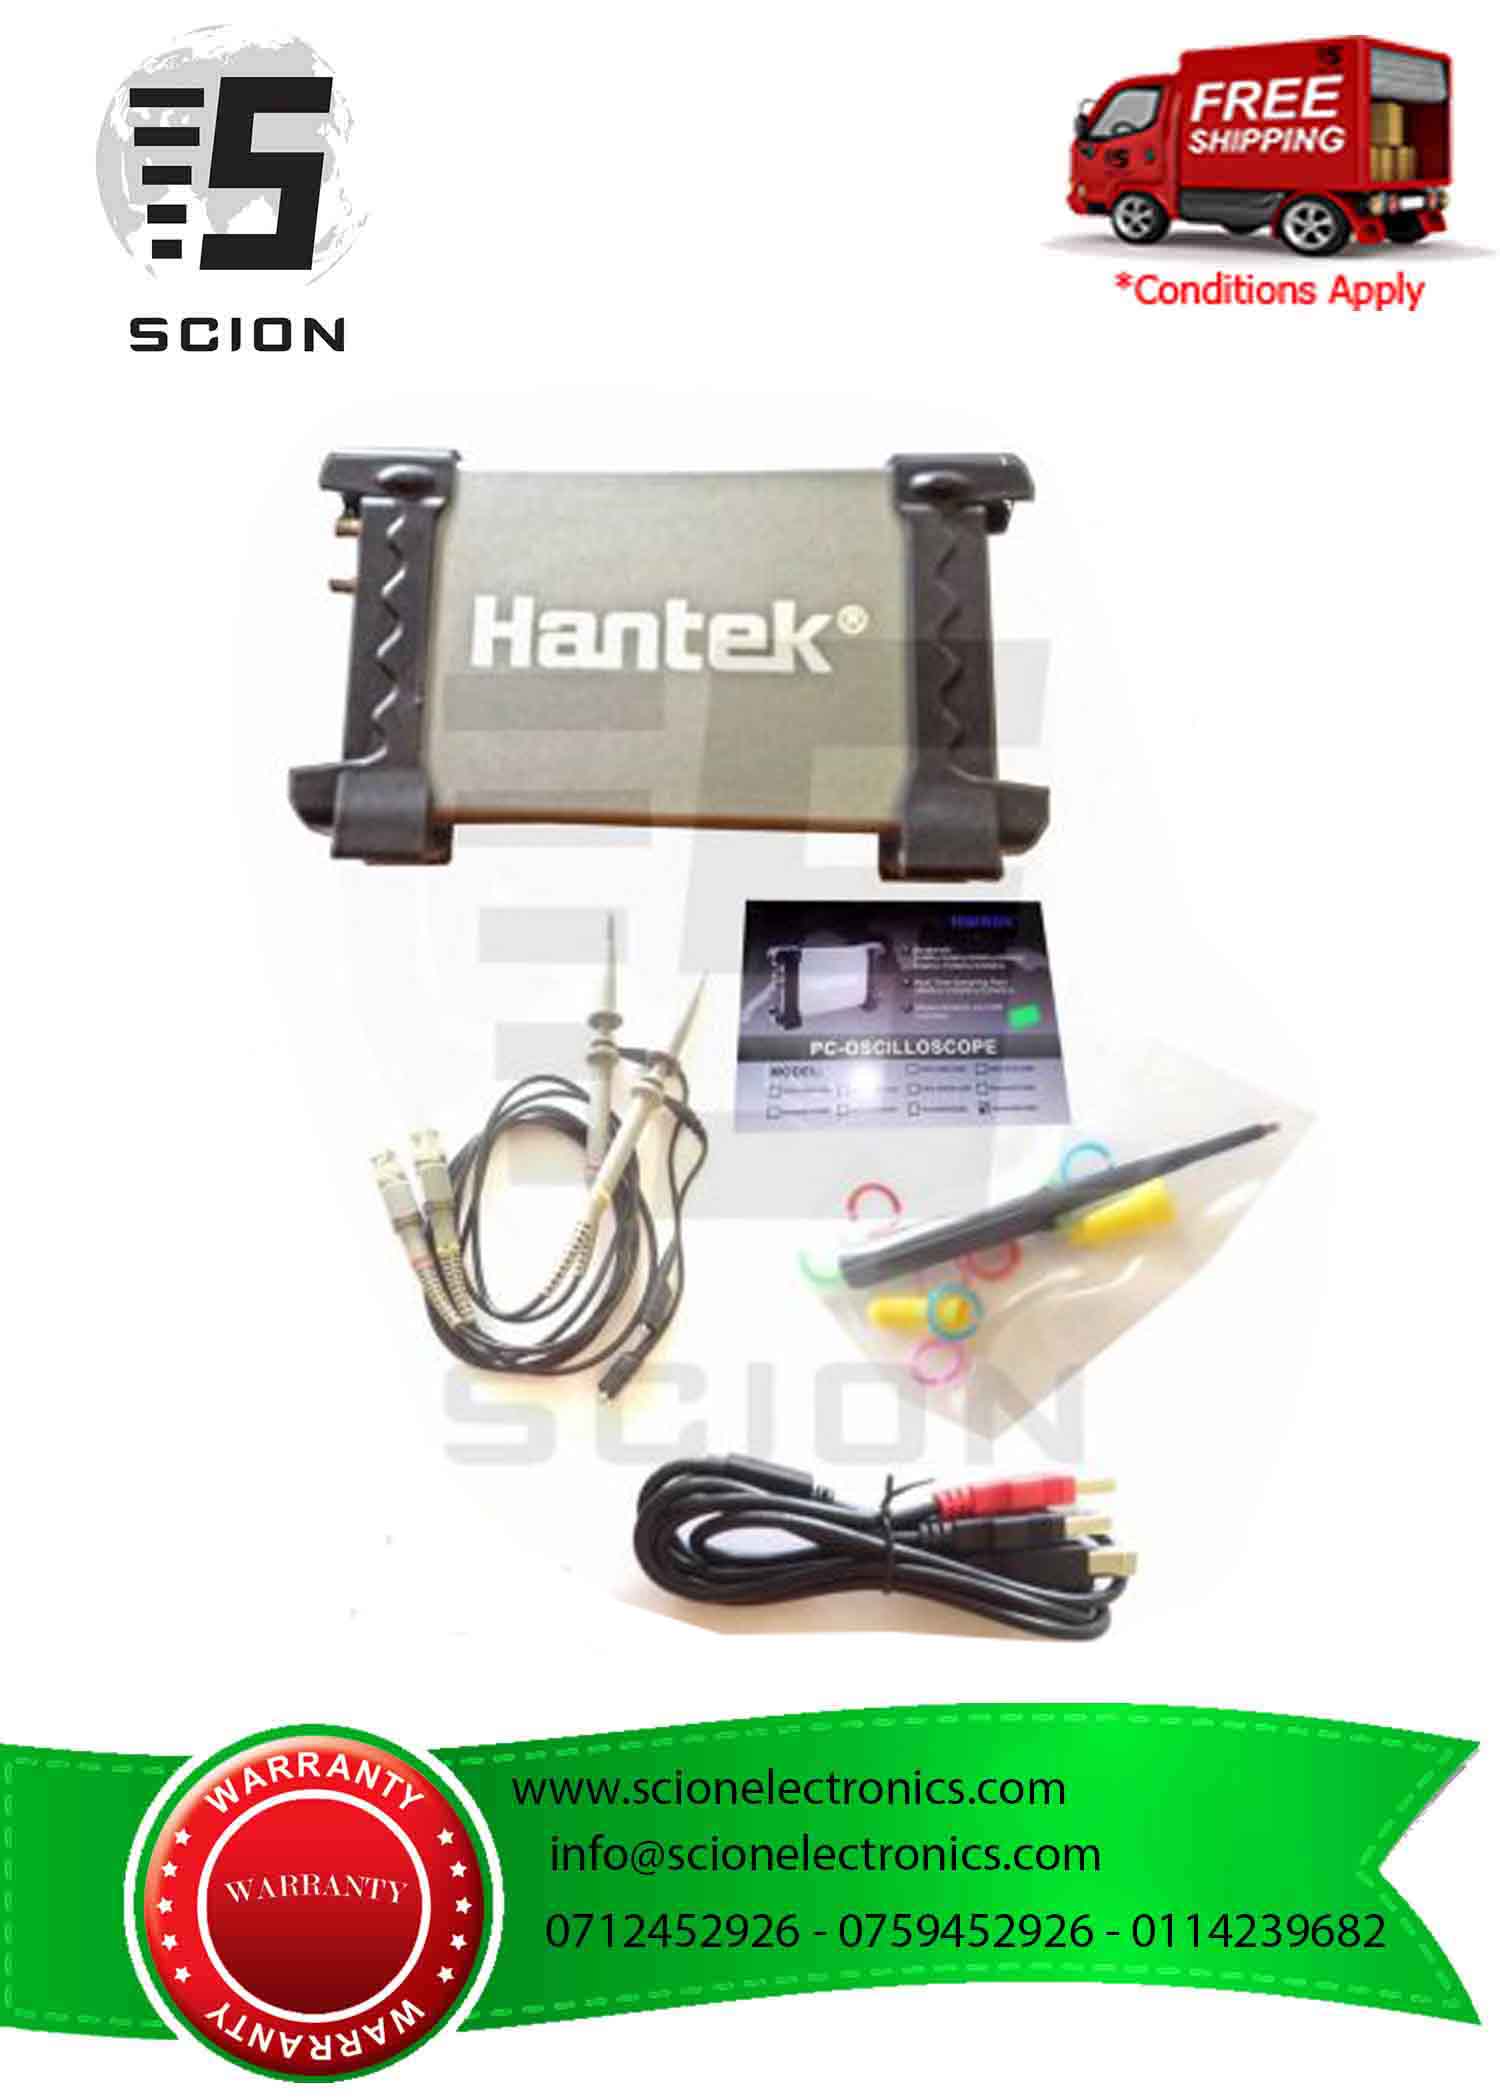 Hantek 6022be Pc Based Usb Digital Storage Oscilloscope Scion Electronics